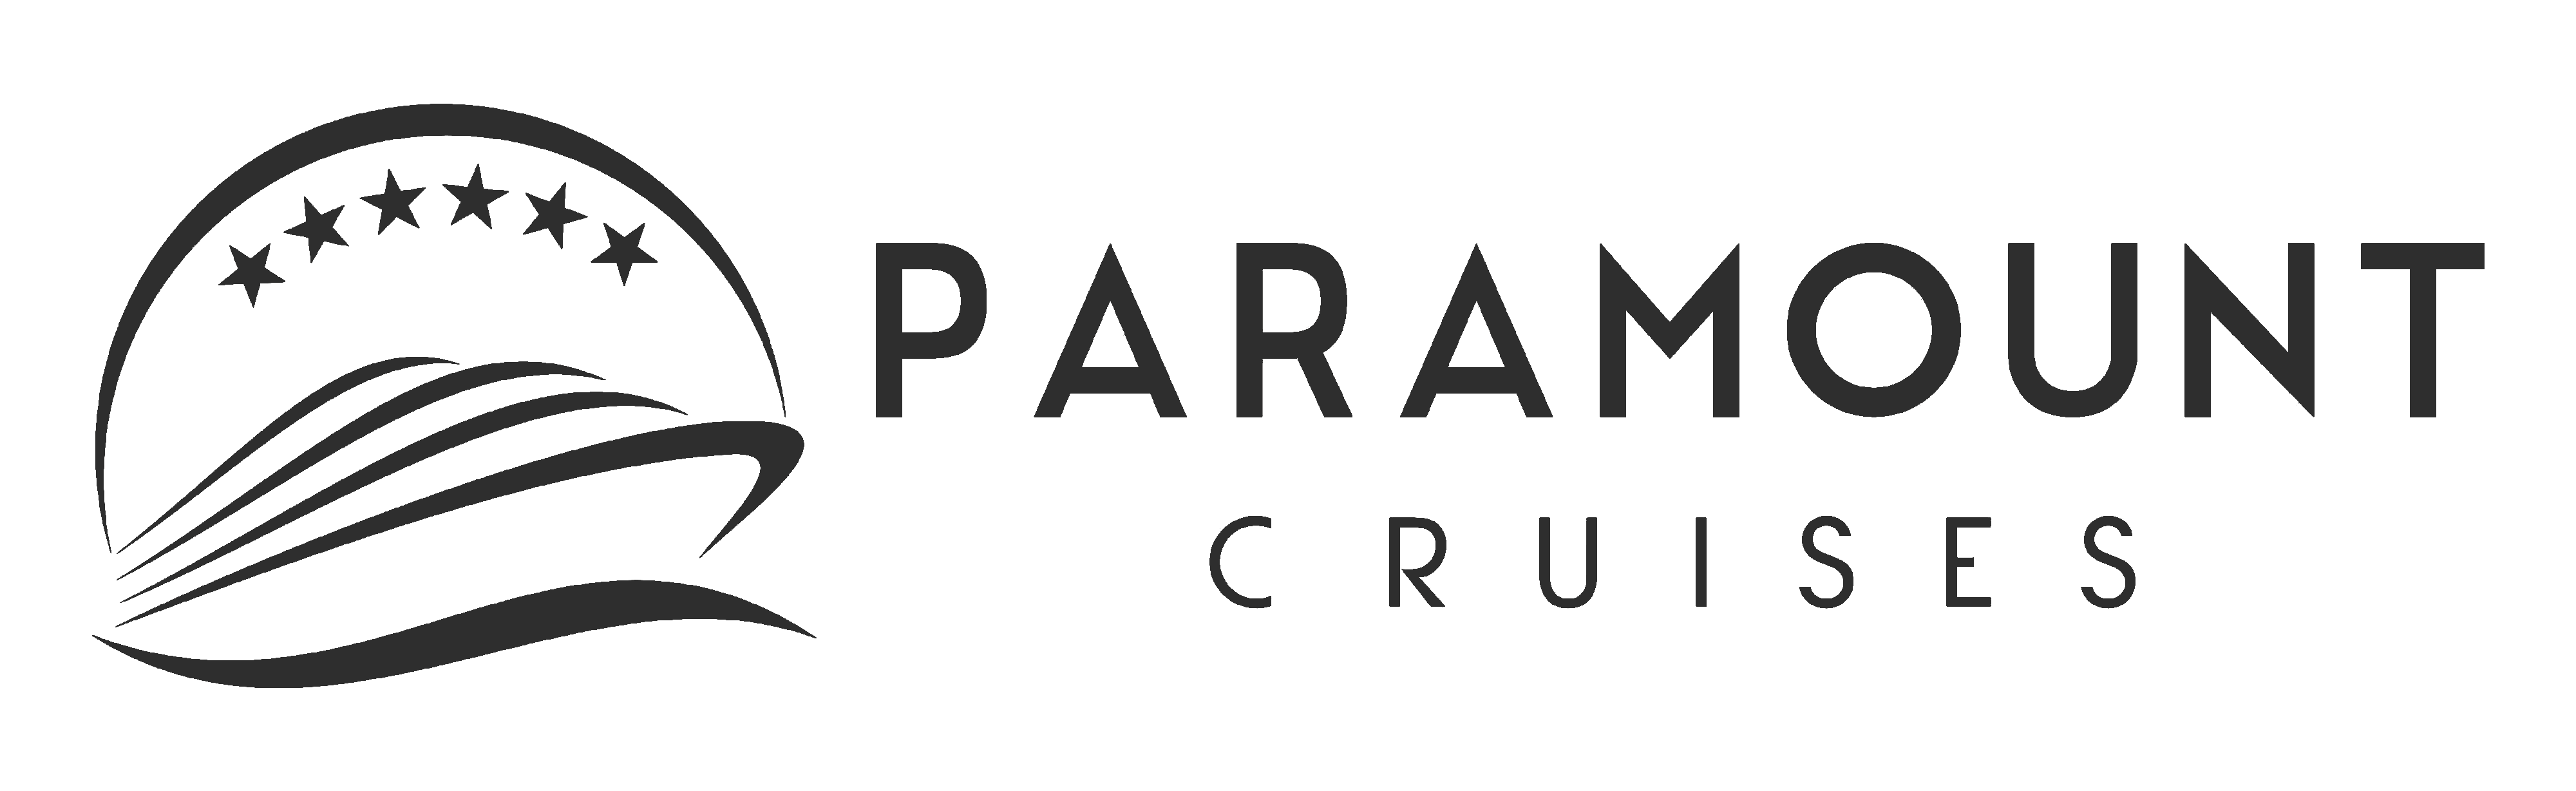 Paramount Cruises Logo